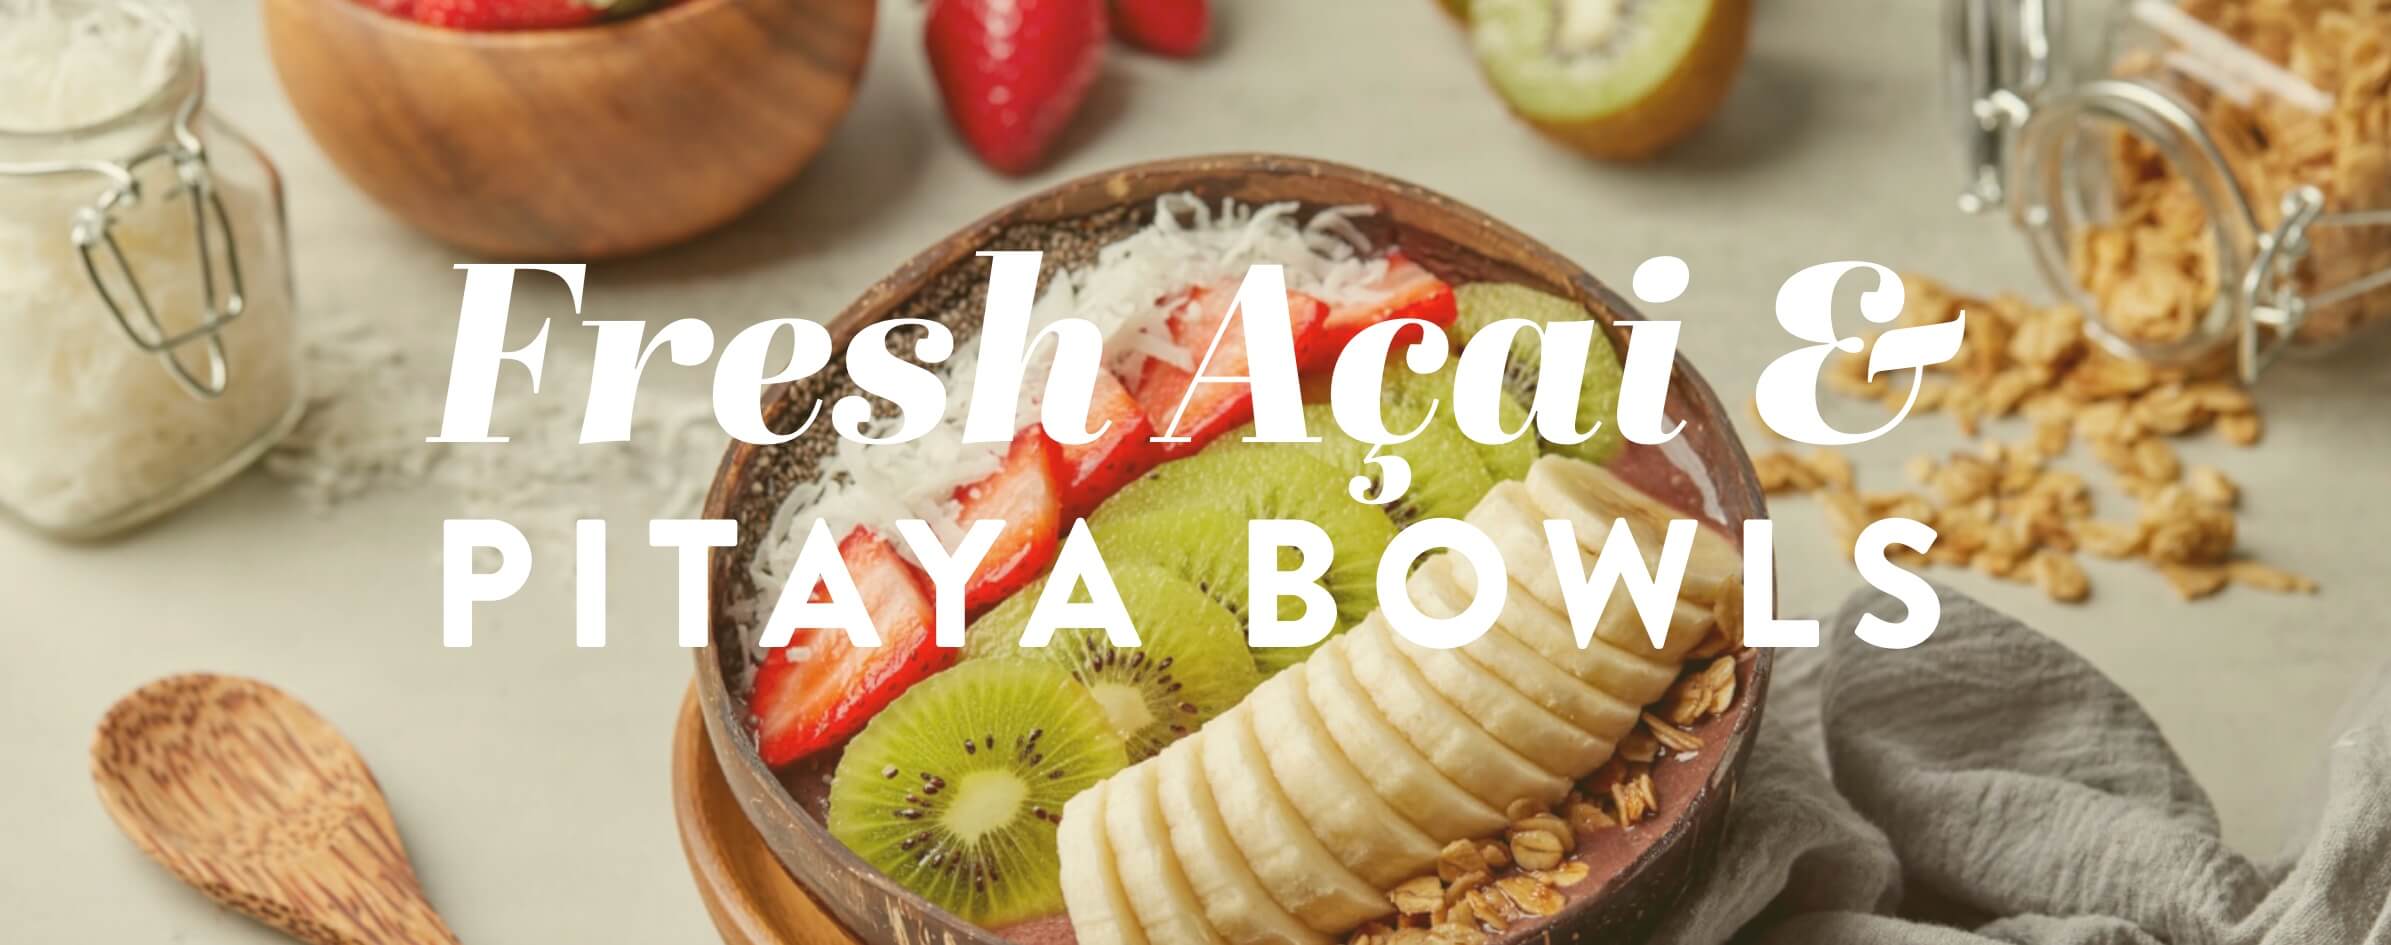 Fresh acai and pitaya bowls